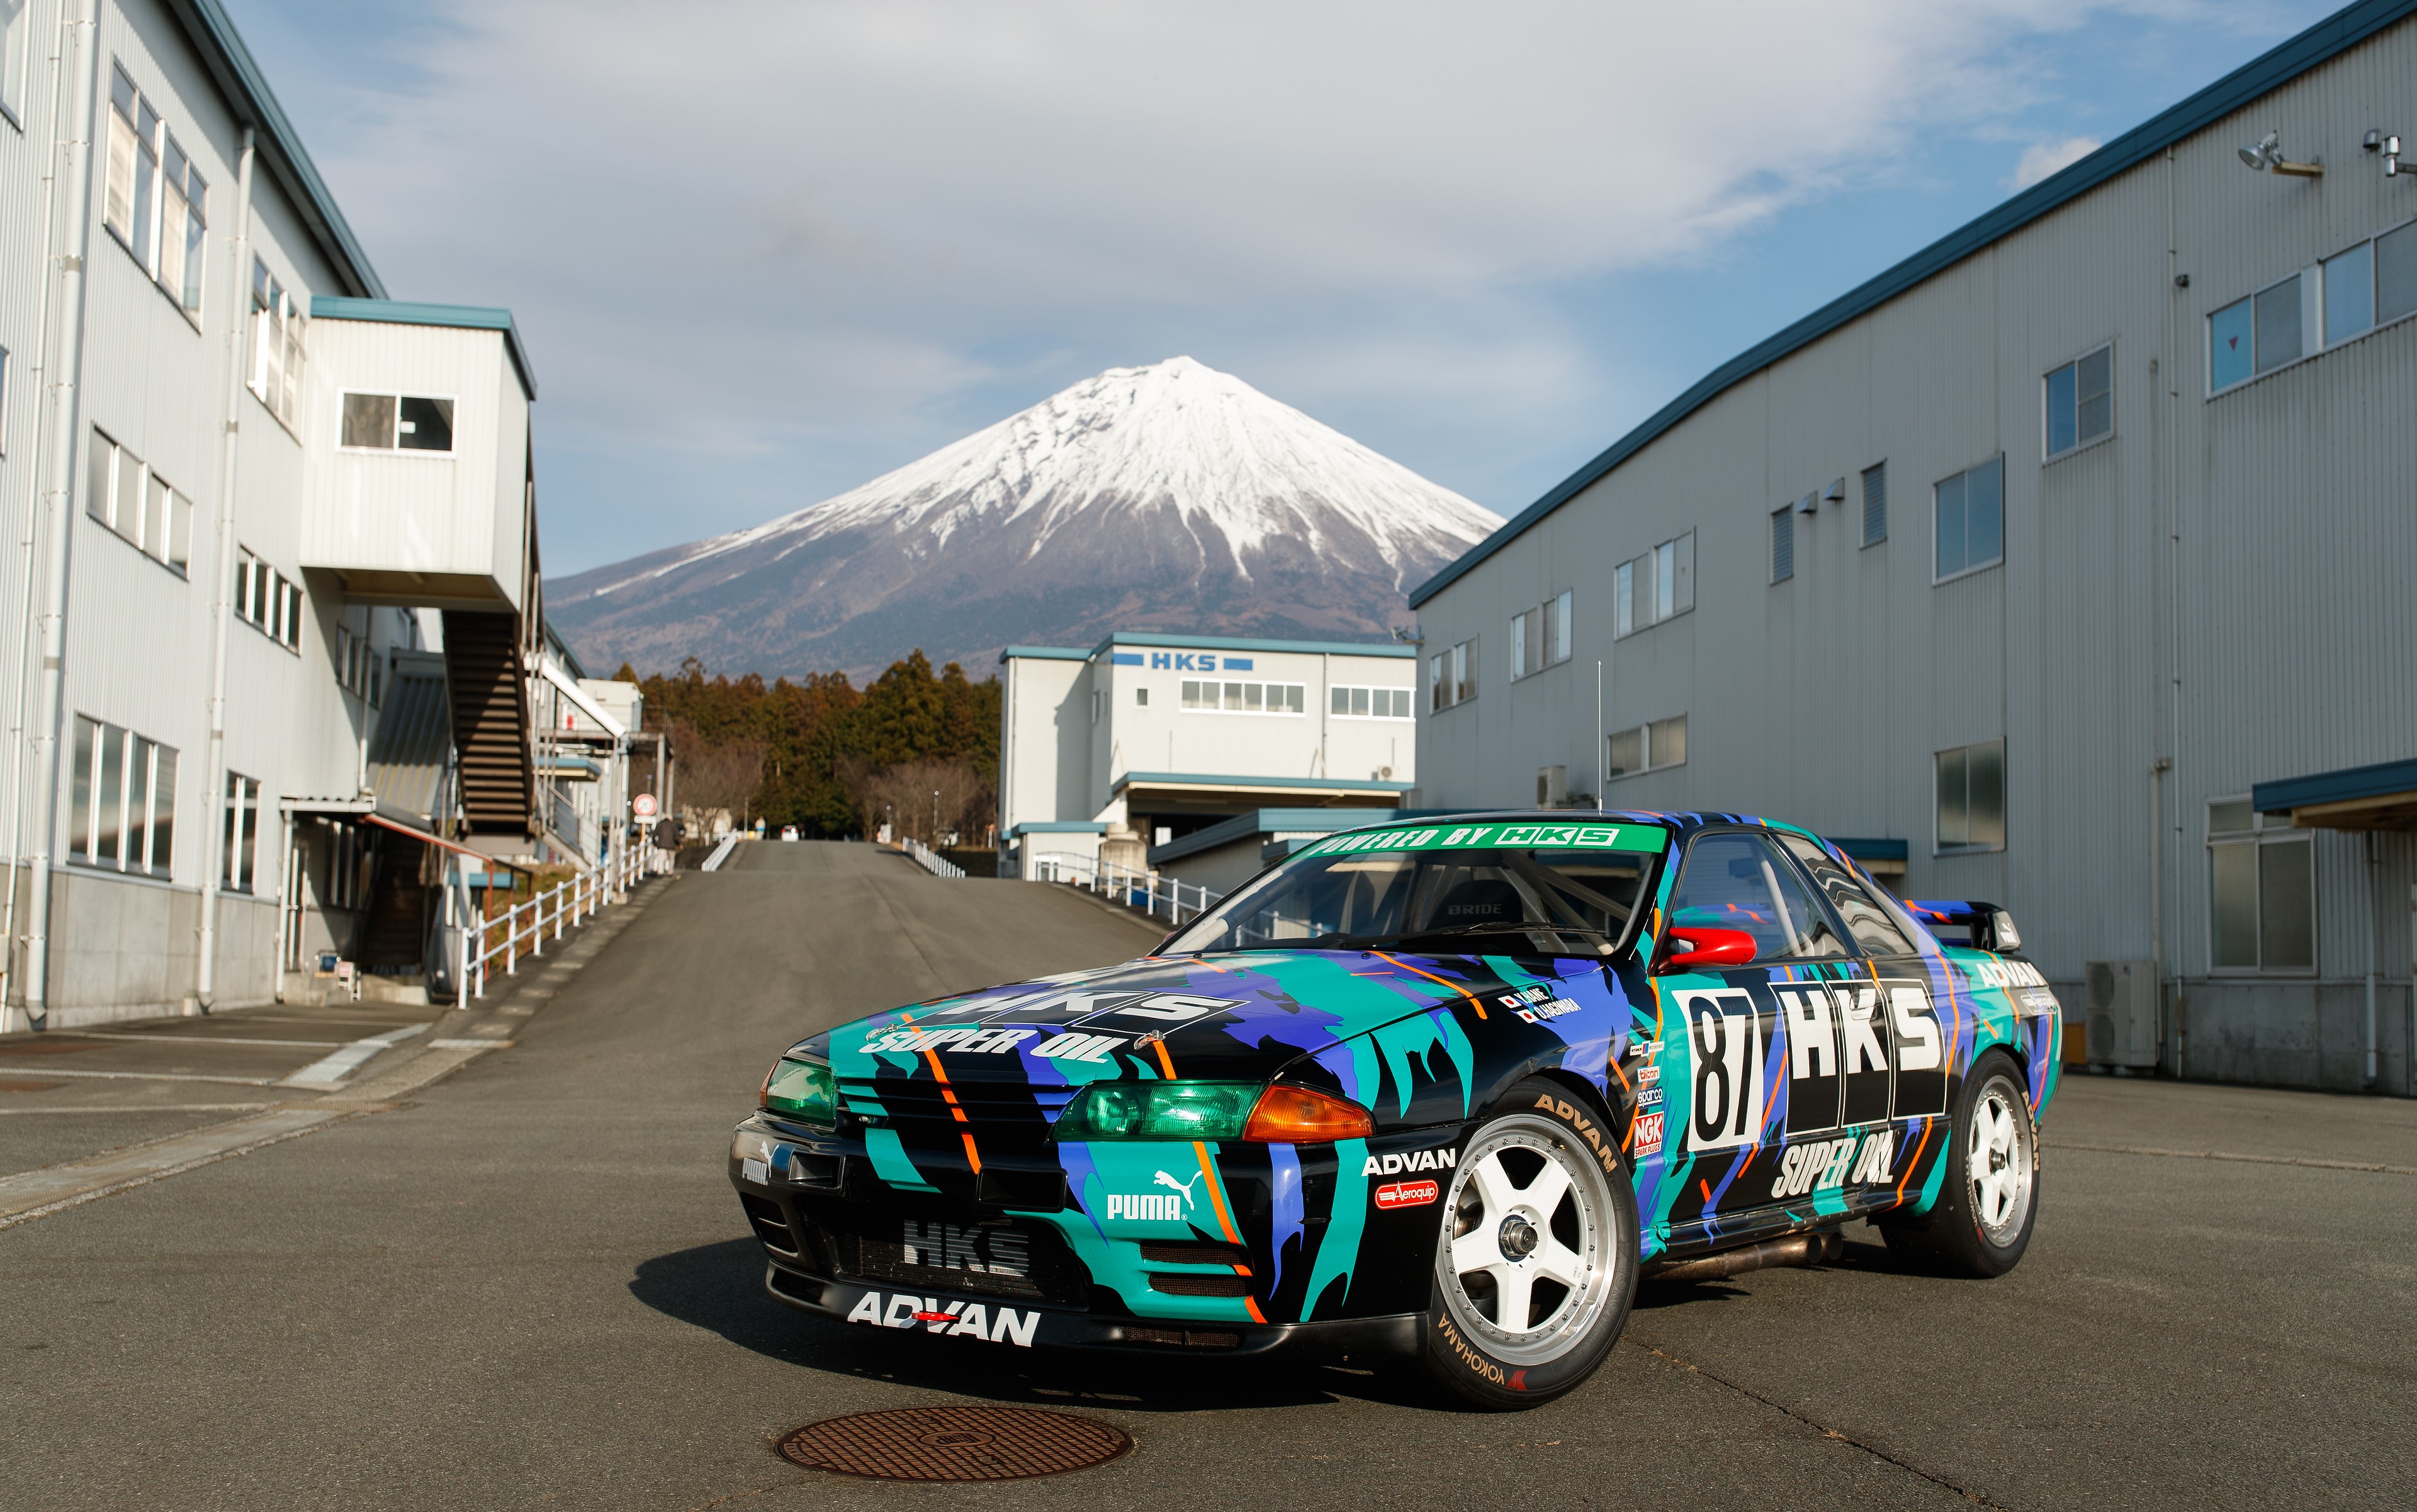 Nissan Skyline R32 HKS Race Cars Livery Mount Fuji Nissan Nissan Skyline JDM Japanese Cars Larry Che 3840x2402